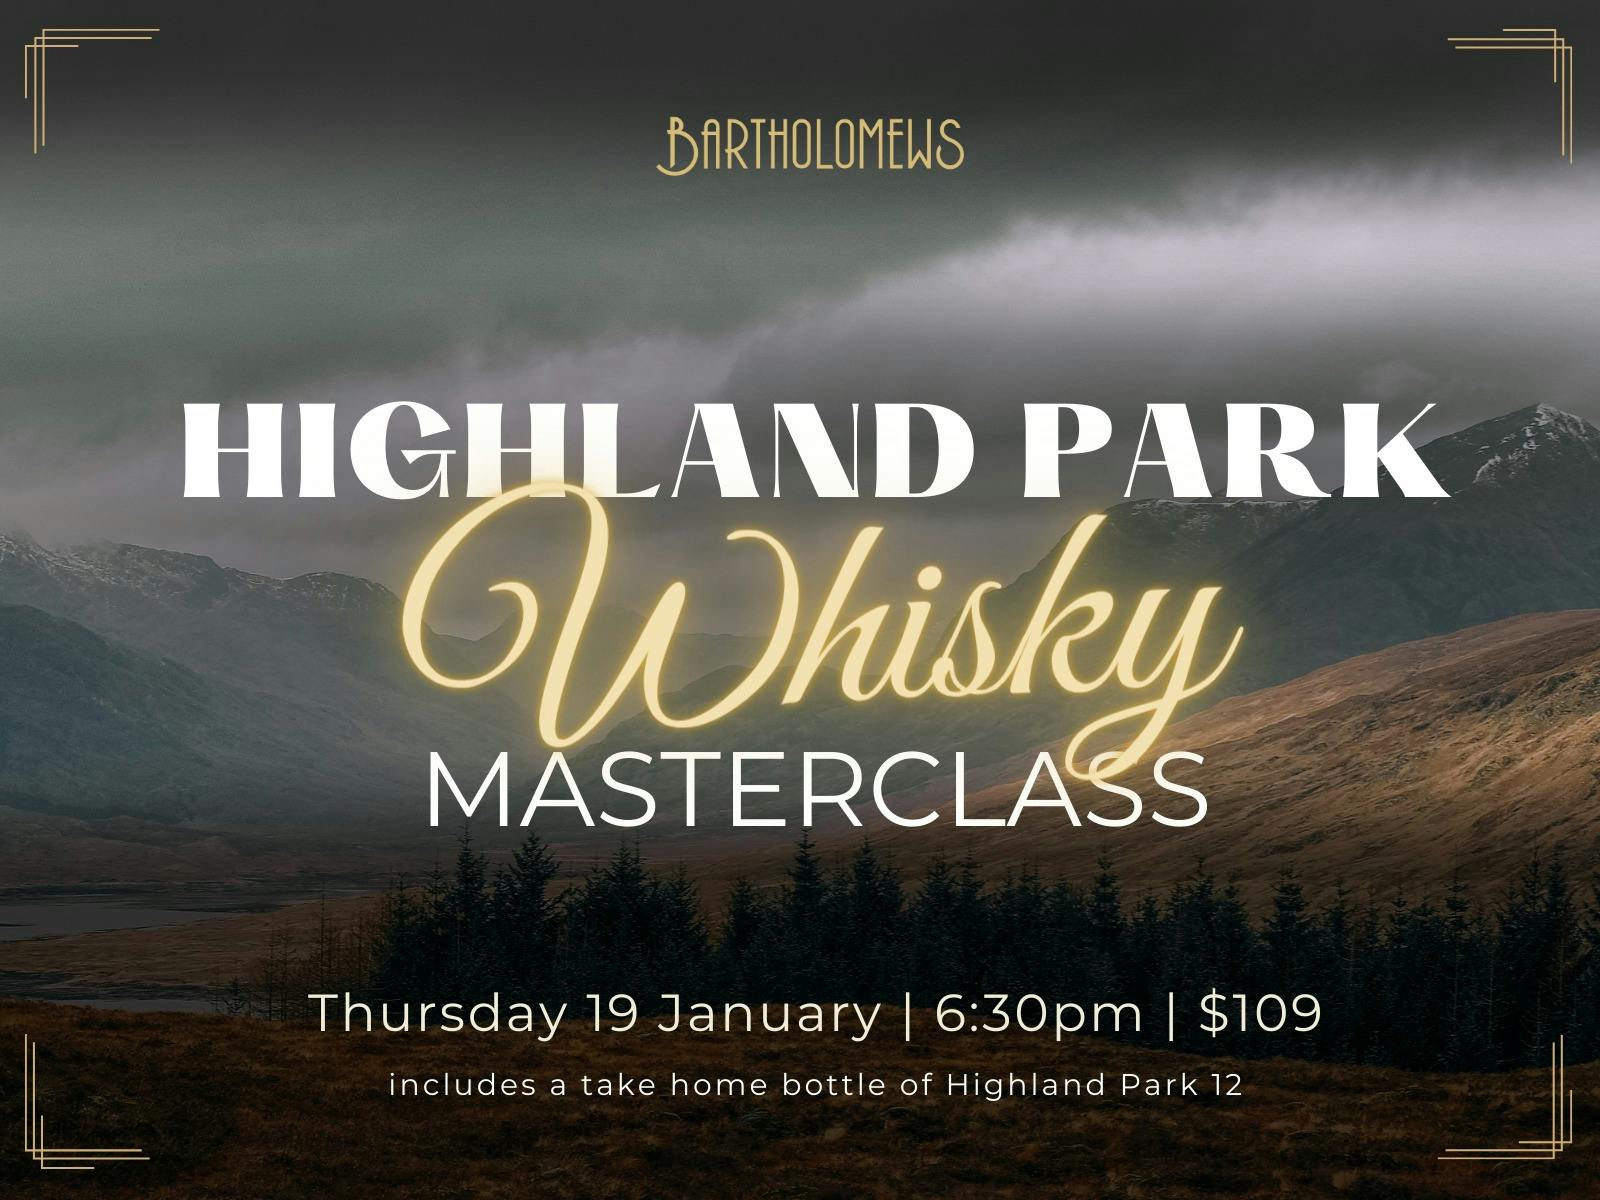 Highland Park Whisky Masterclass